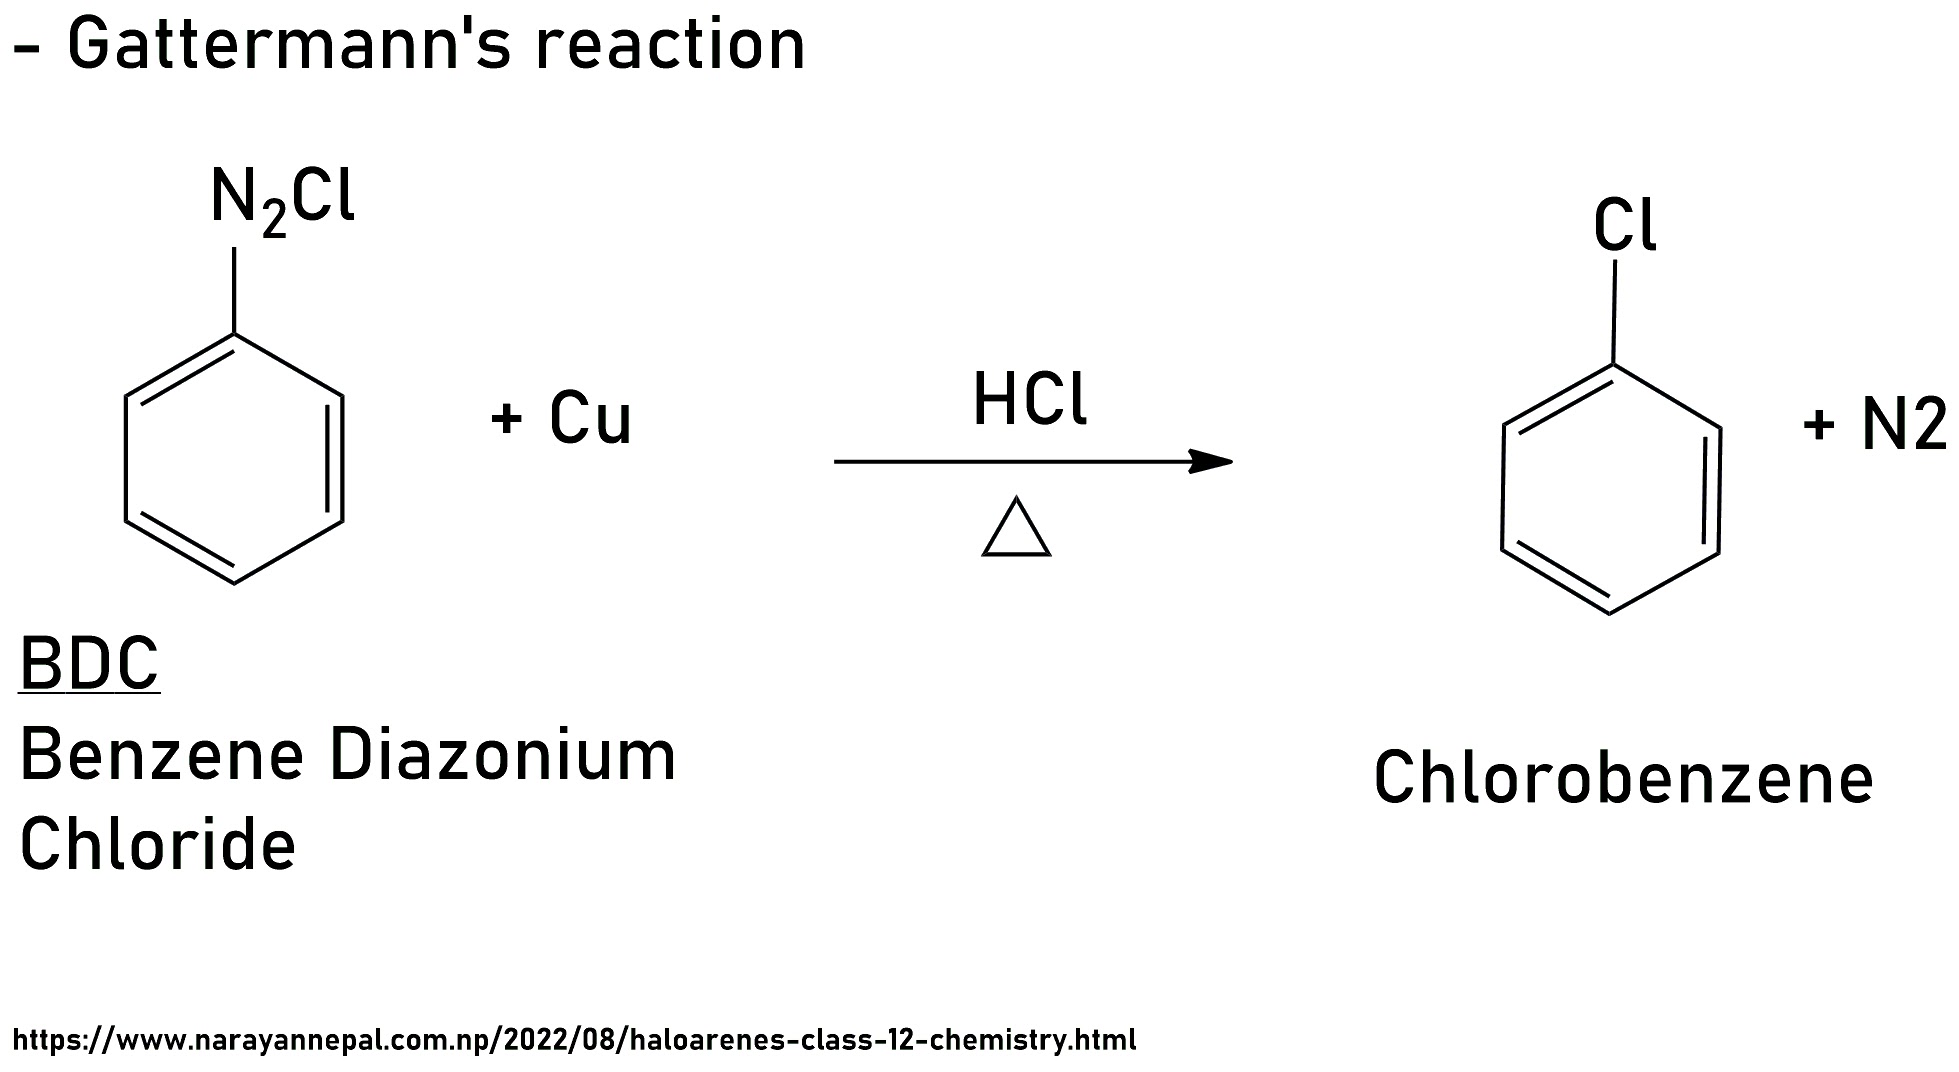 Gattermann's reaction Class 12 Chemistry